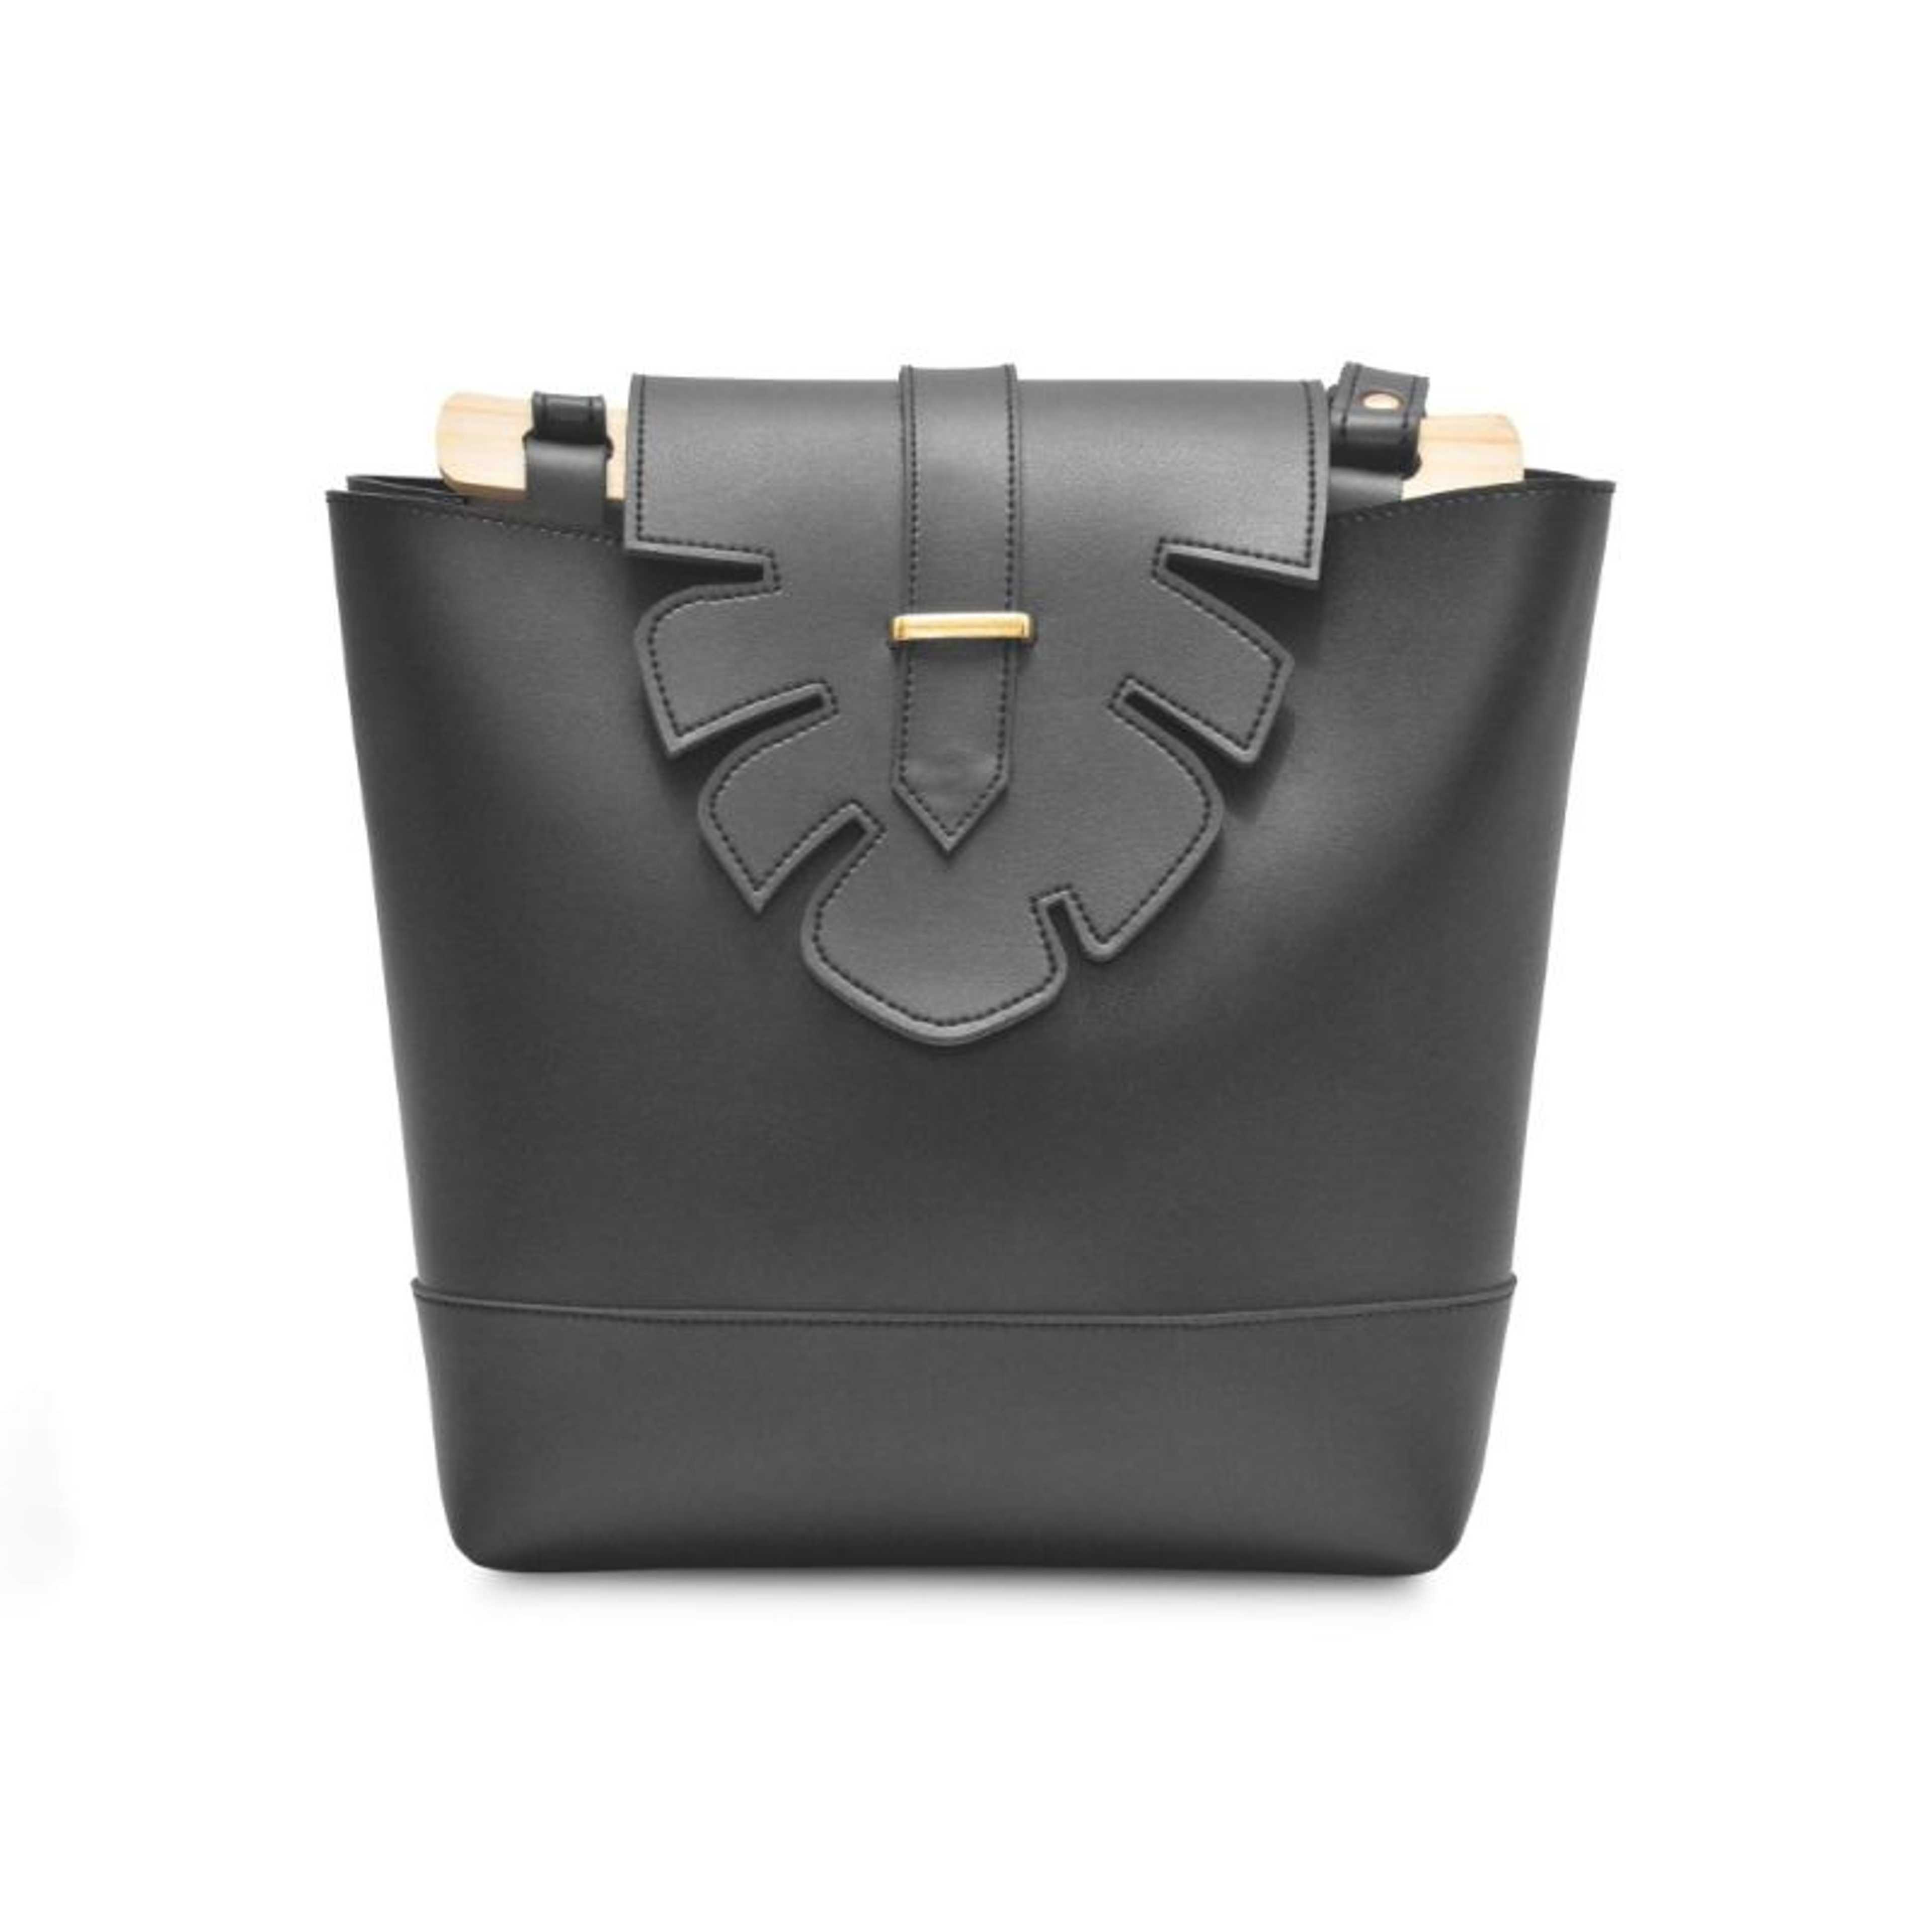 Woman Handbags - Black Leaflet handbag